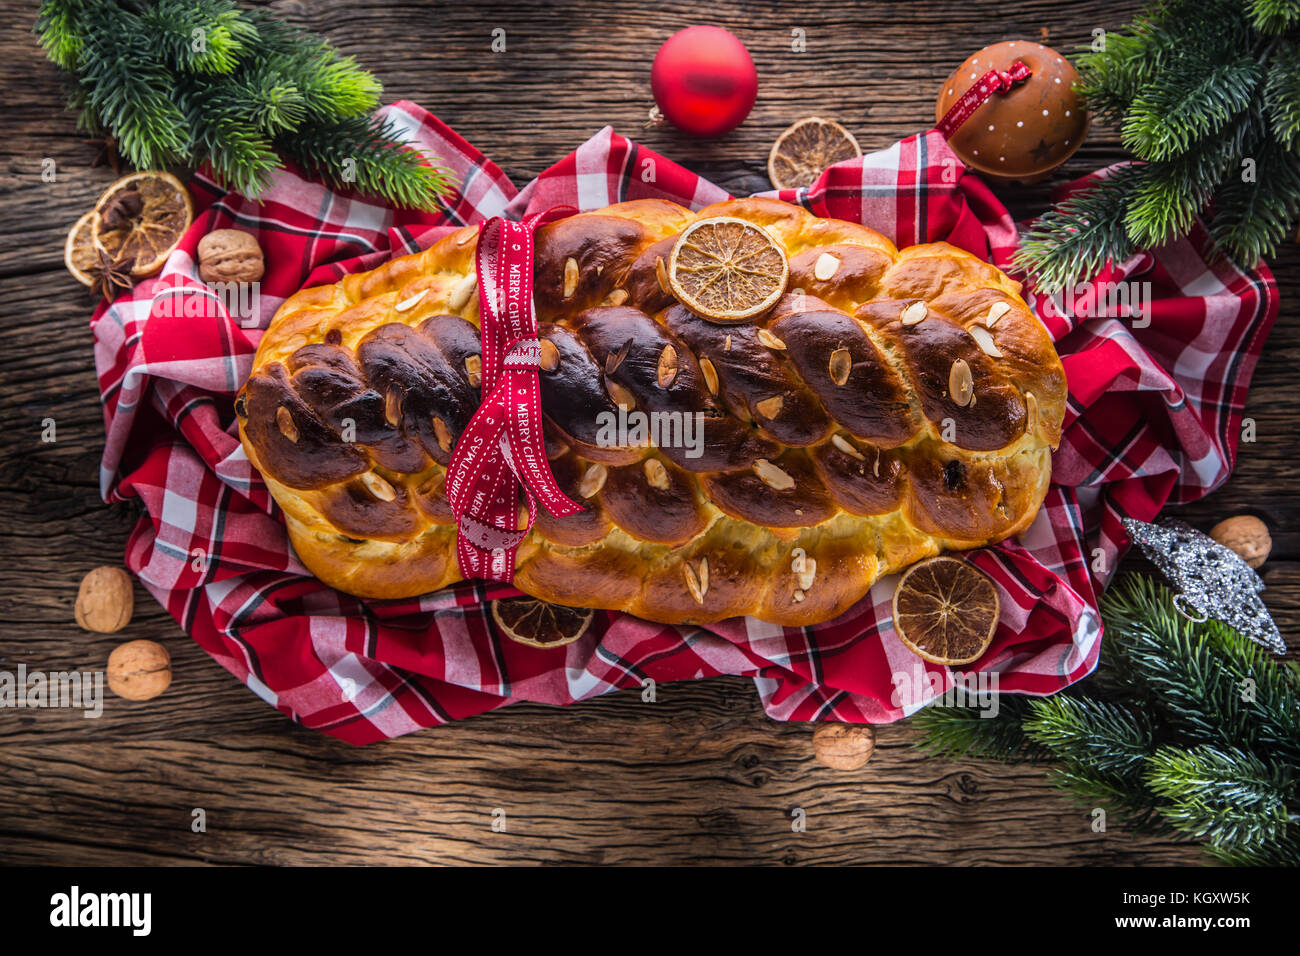 Christmas Cake and Christmas Decorations. Christmas cake, slovak or eastern europe traditional pastry - vianocka. Stock Photo